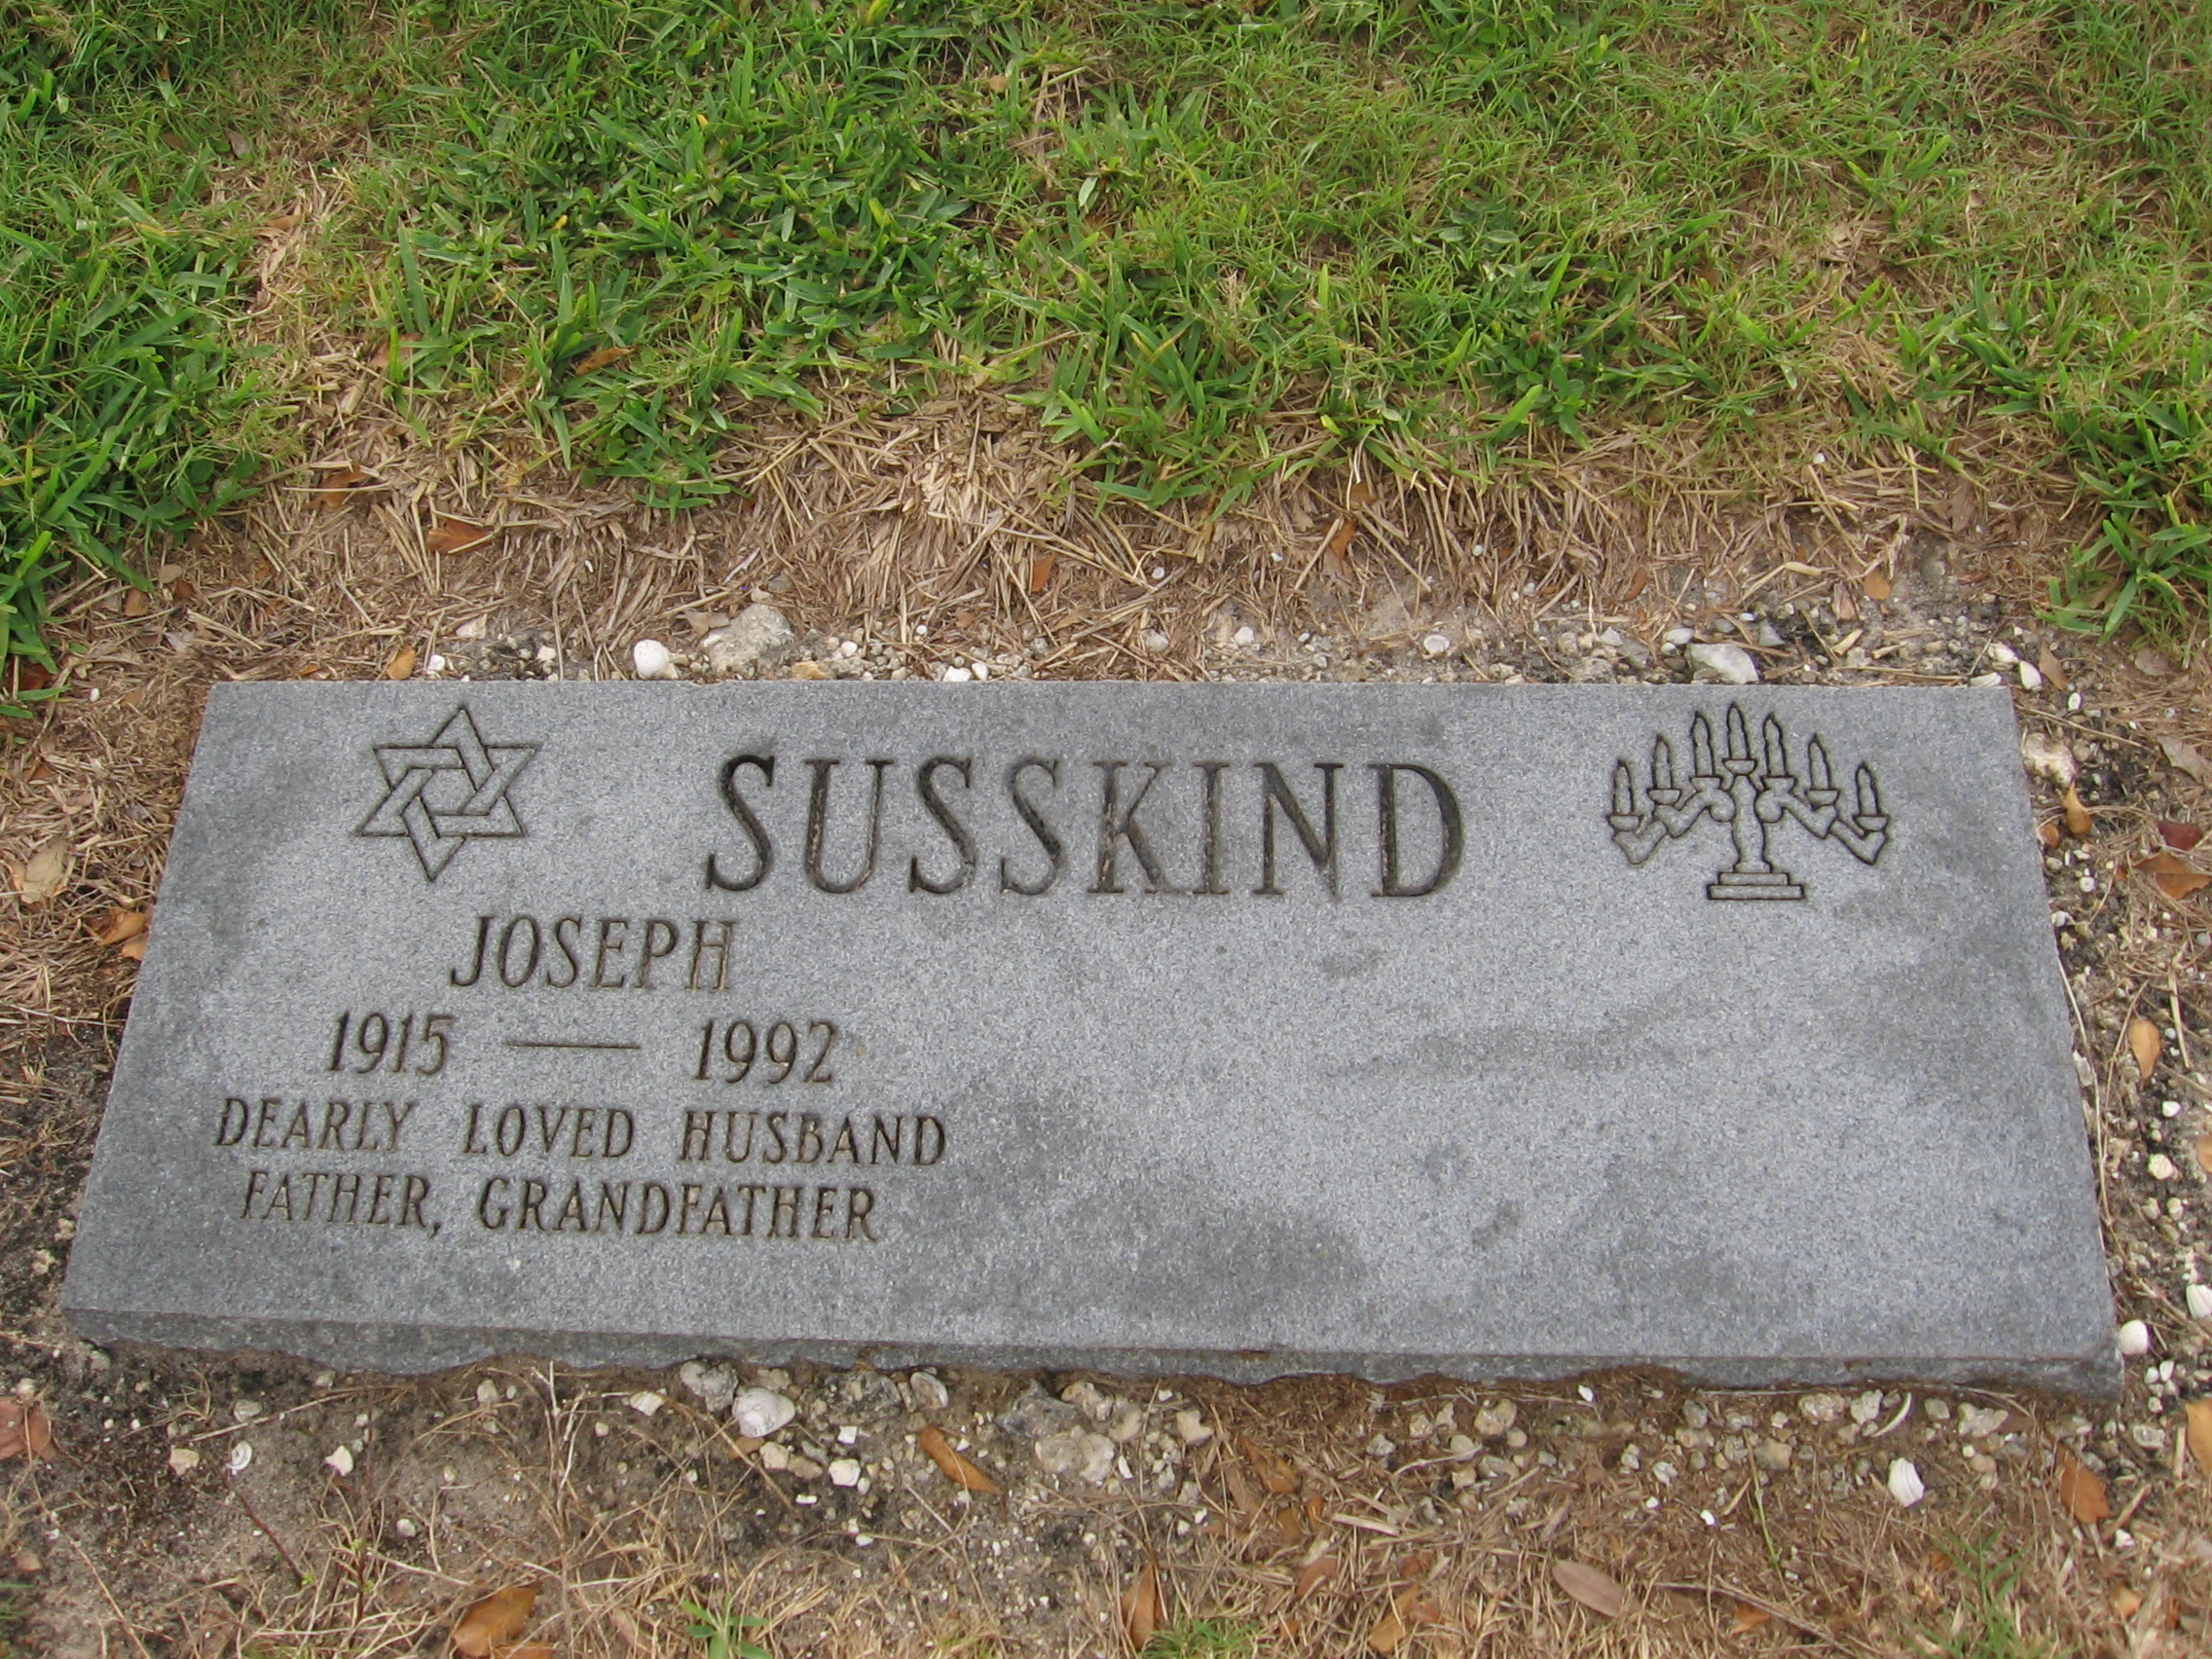 Joseph Susskind